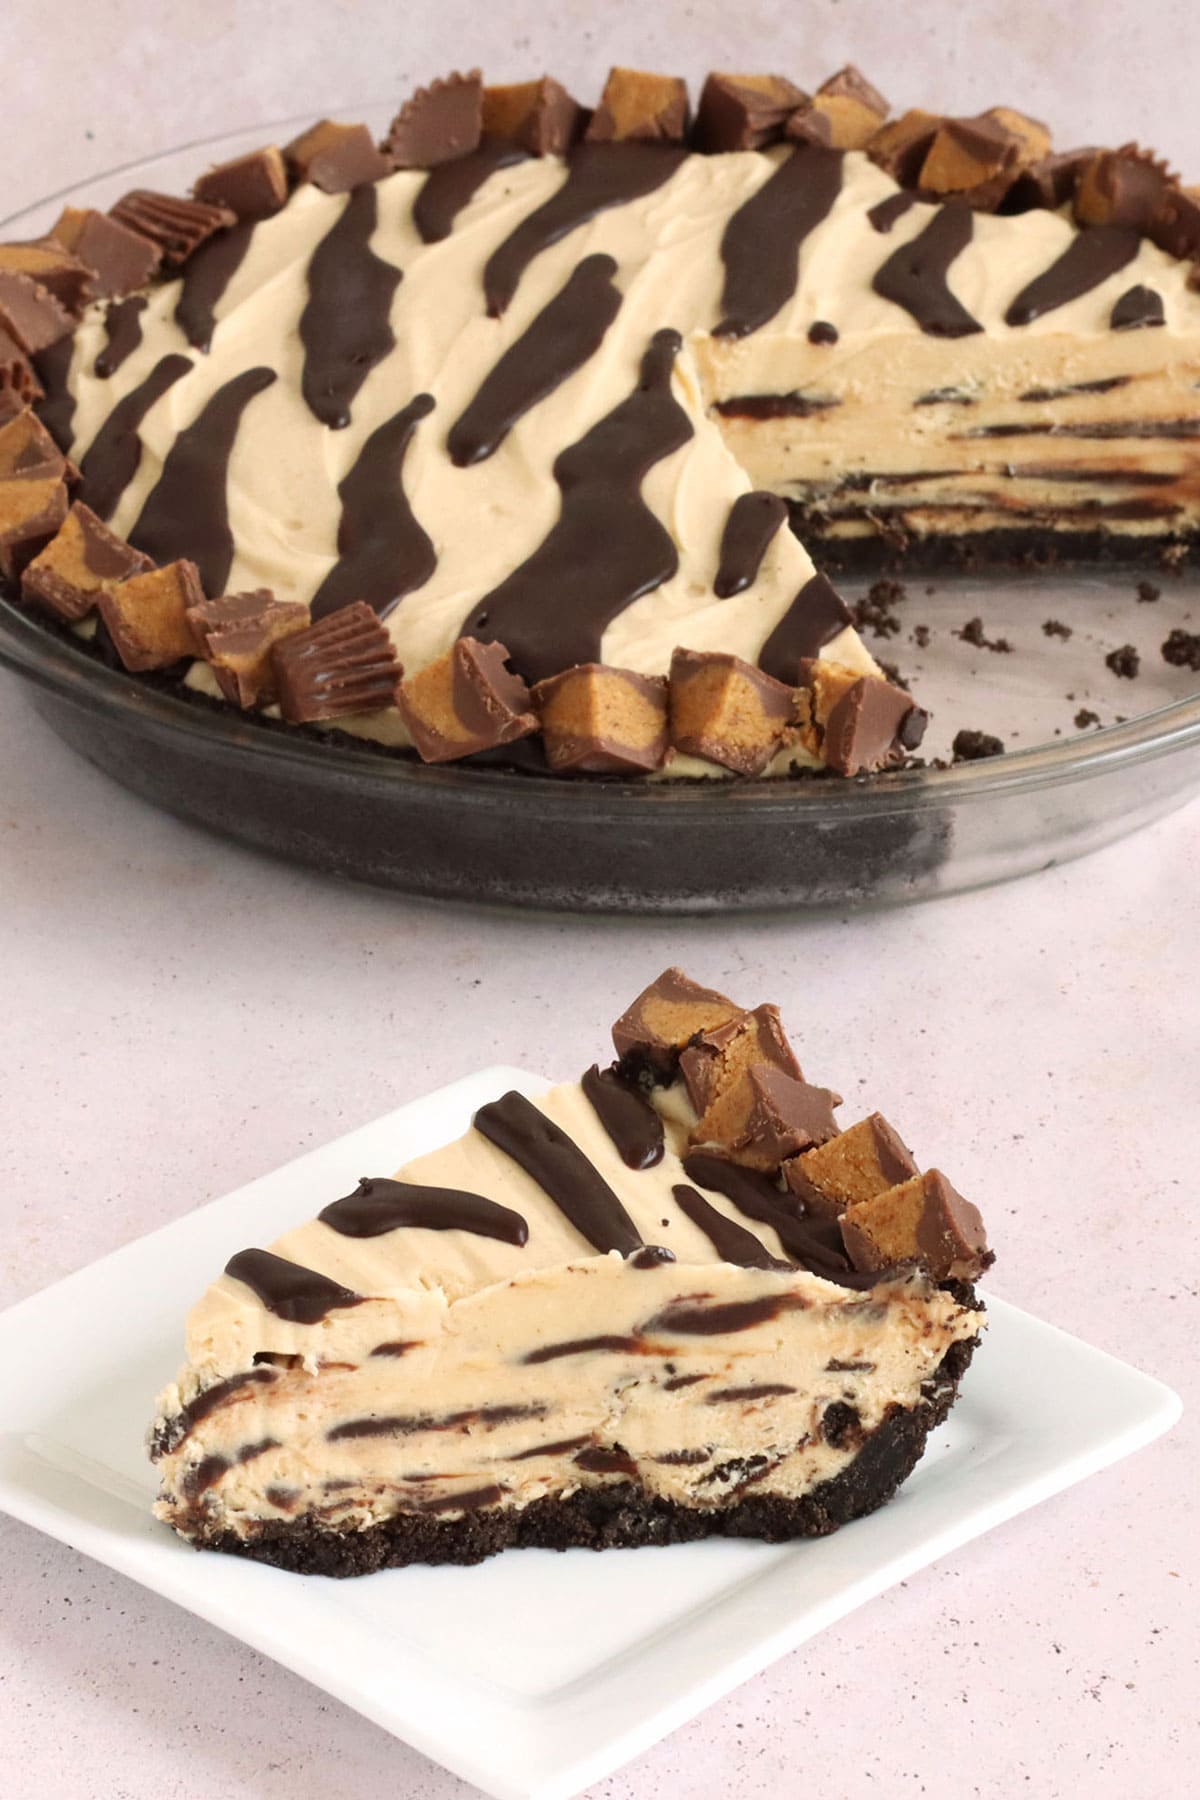 No-bake peanut butter and chocolate ganache Tiger Pie.